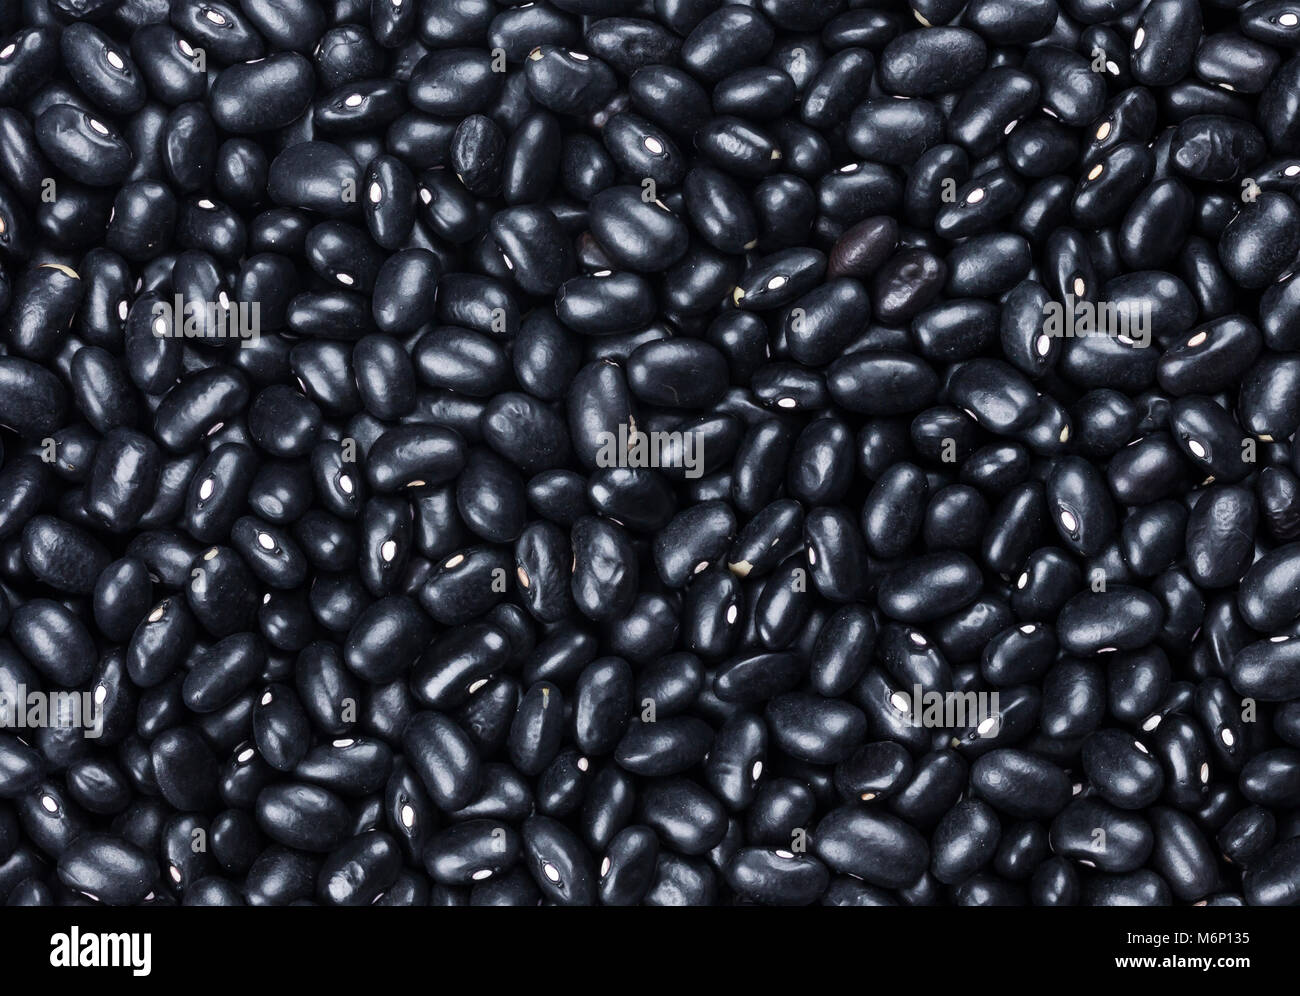 Black kidney beans texture Stock Photo